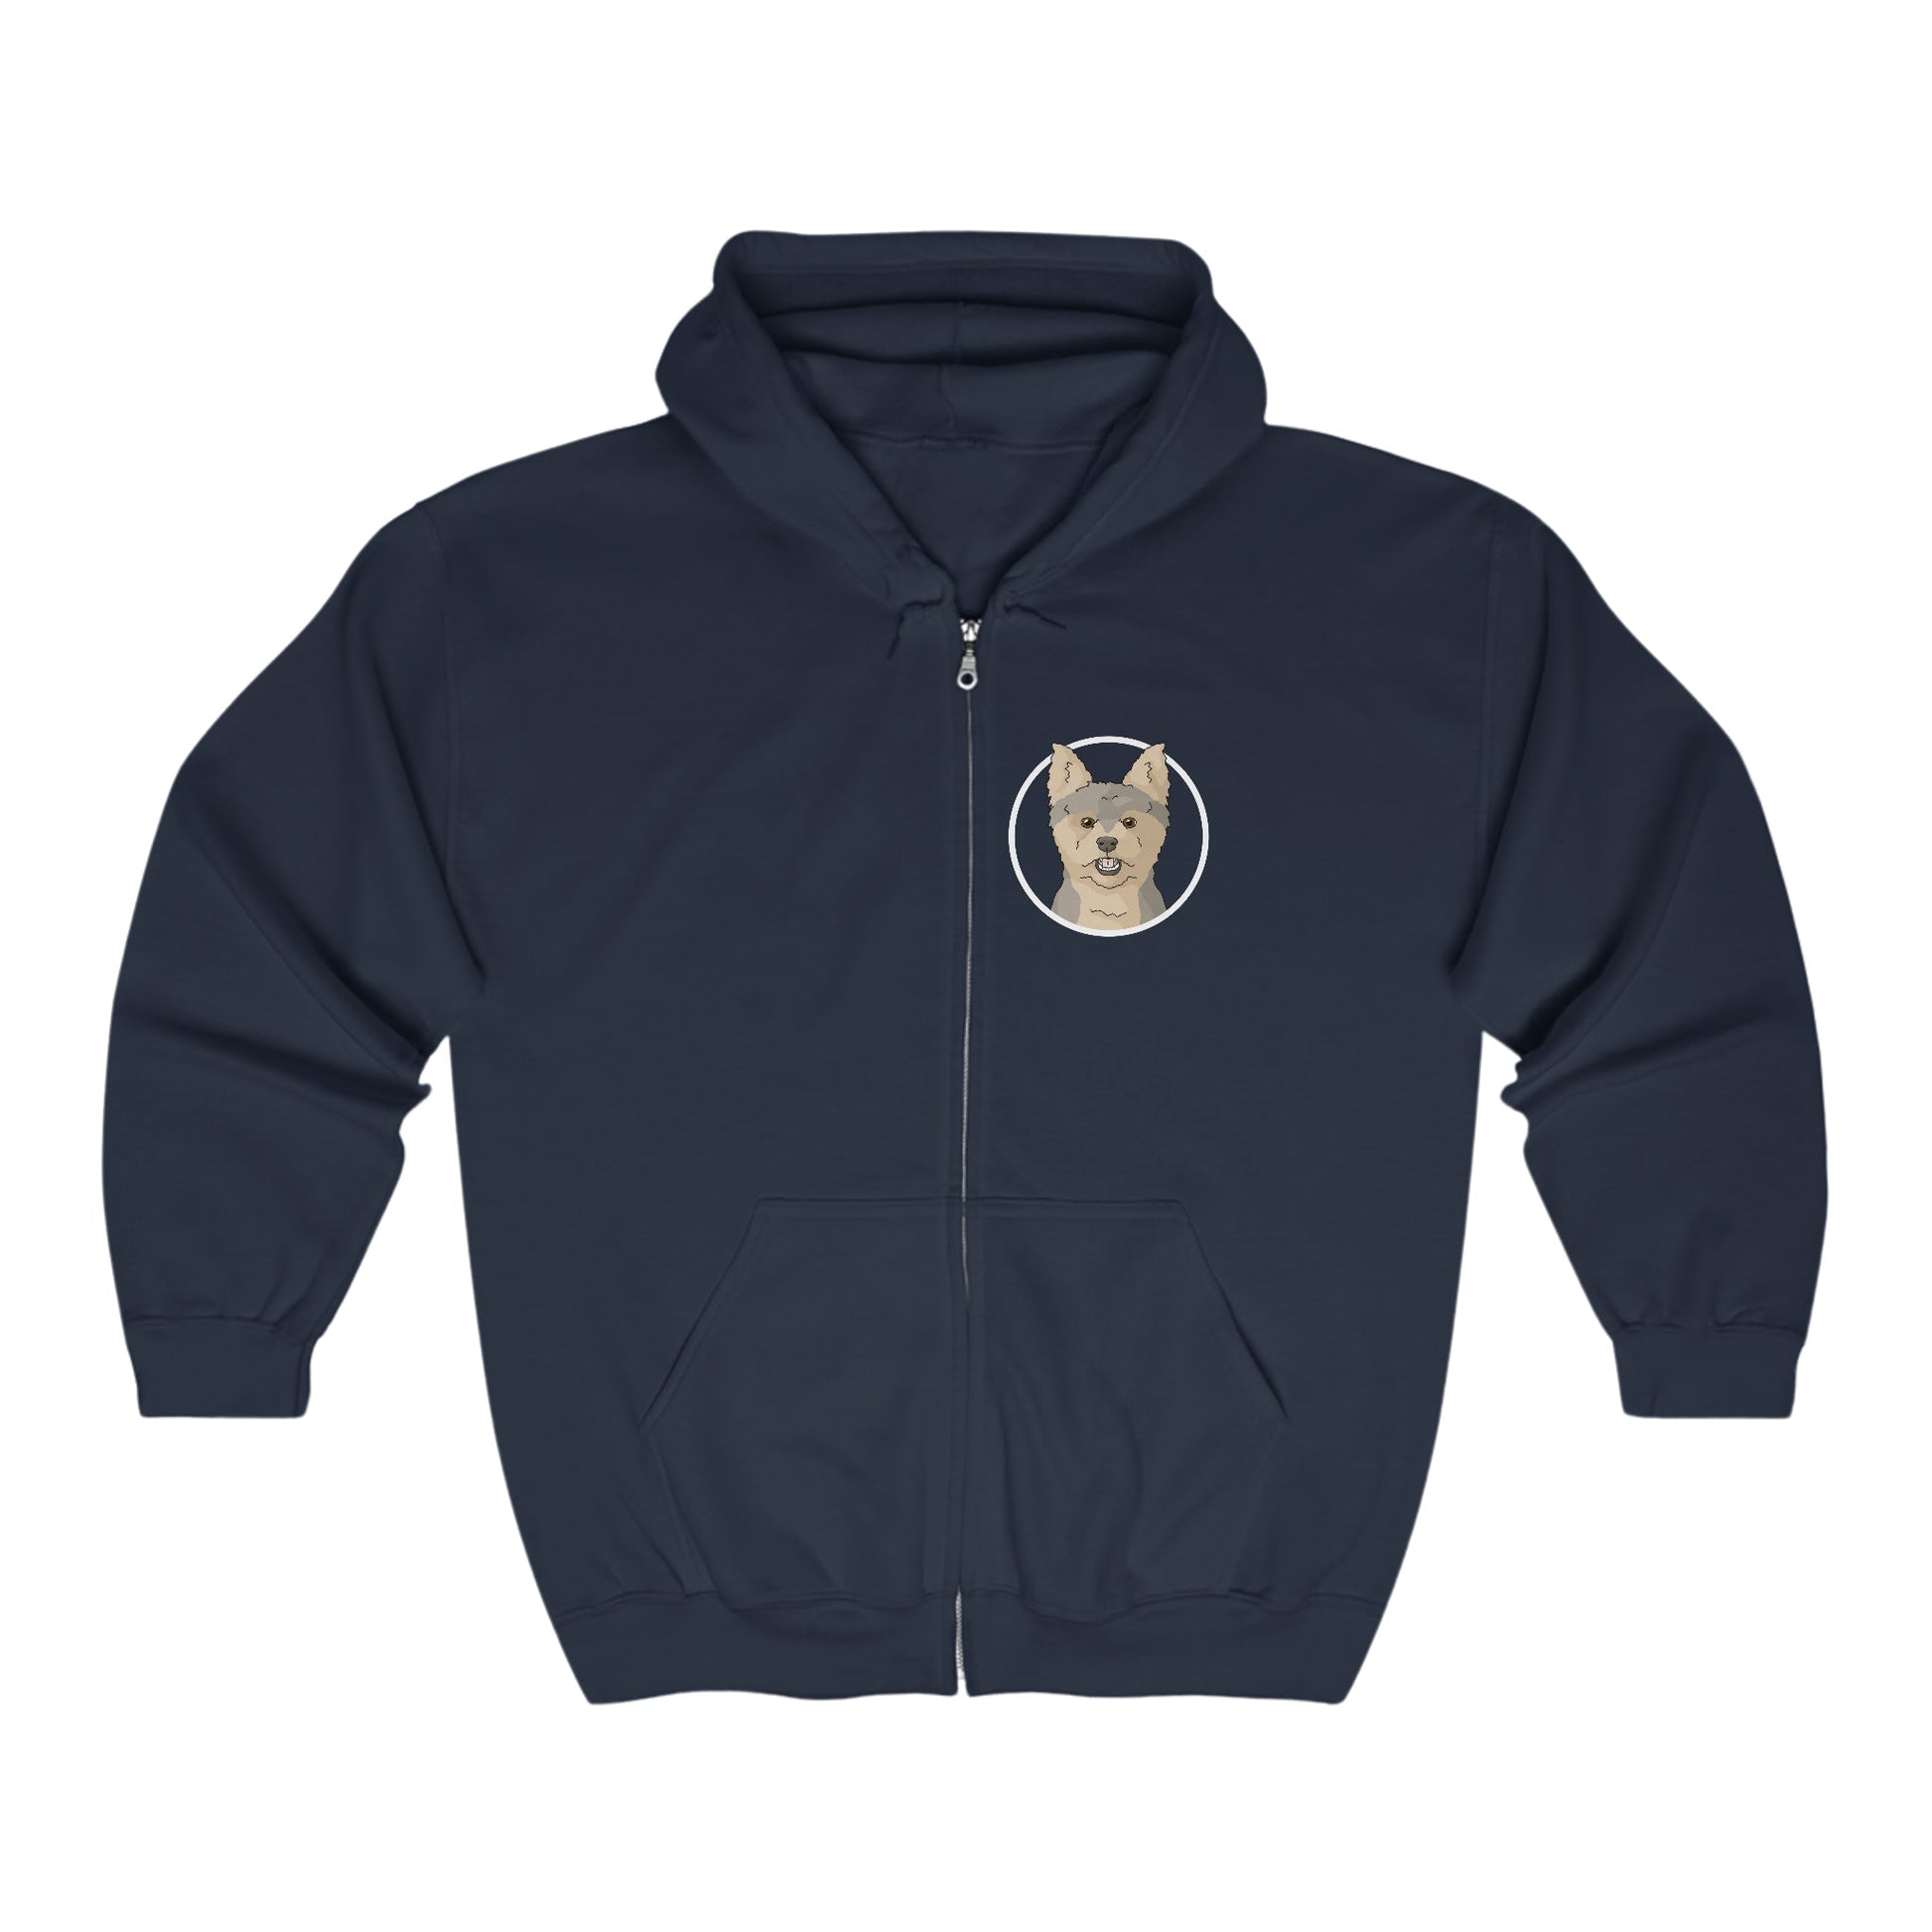 Yorkshire Terrier Circle | Zip-up Sweatshirt - Detezi Designs-14070558027953900946